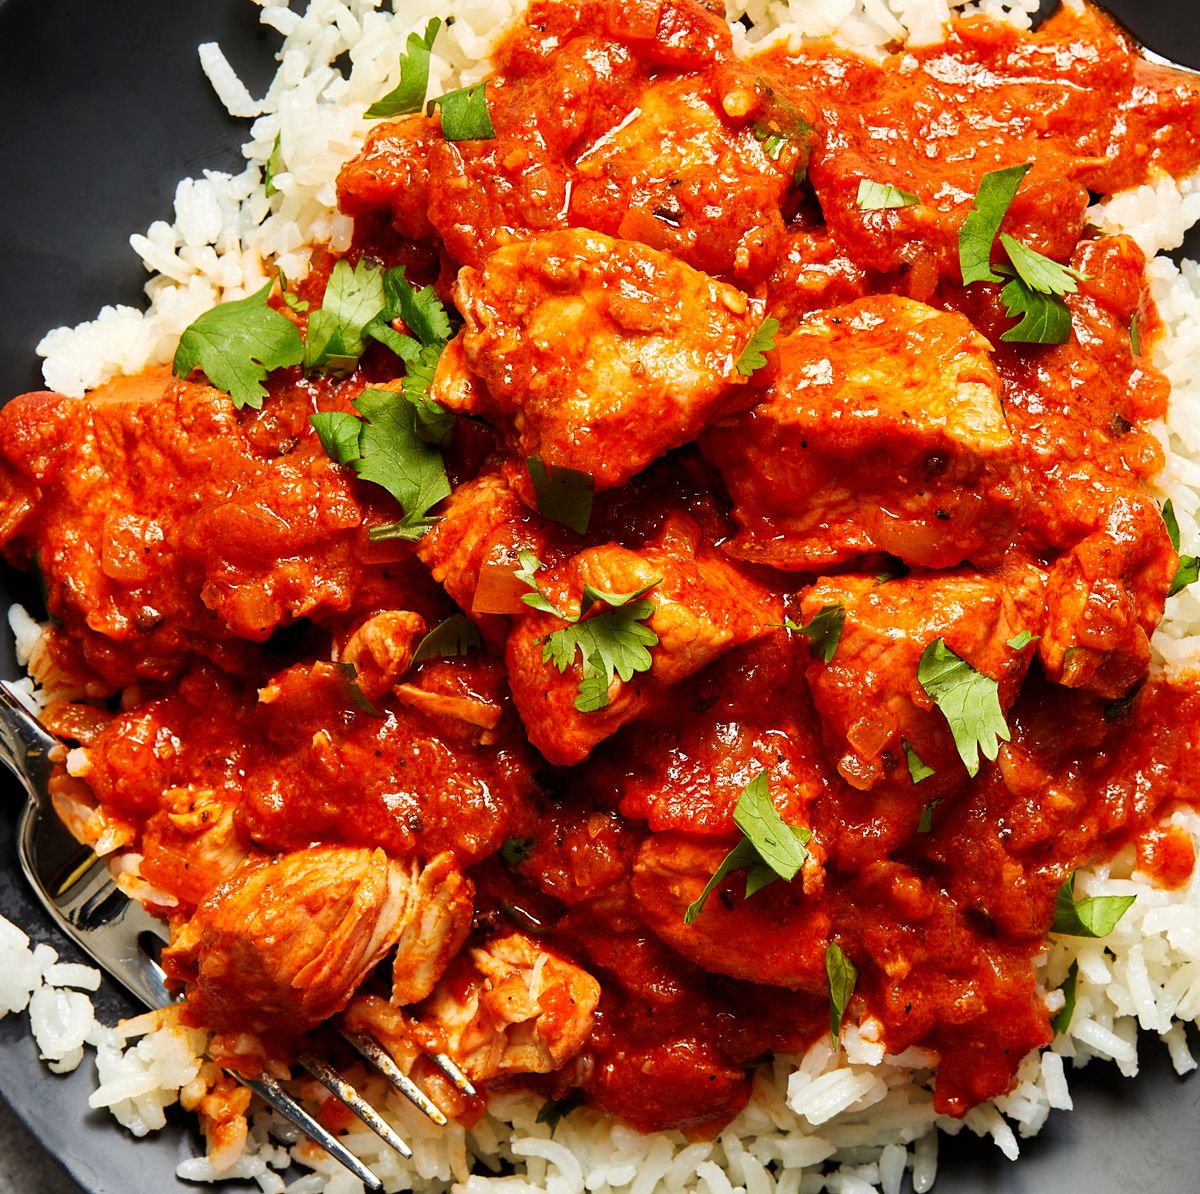 Best Chicken Madras Curry Recipe - How to Make Homemade Chicken Madras